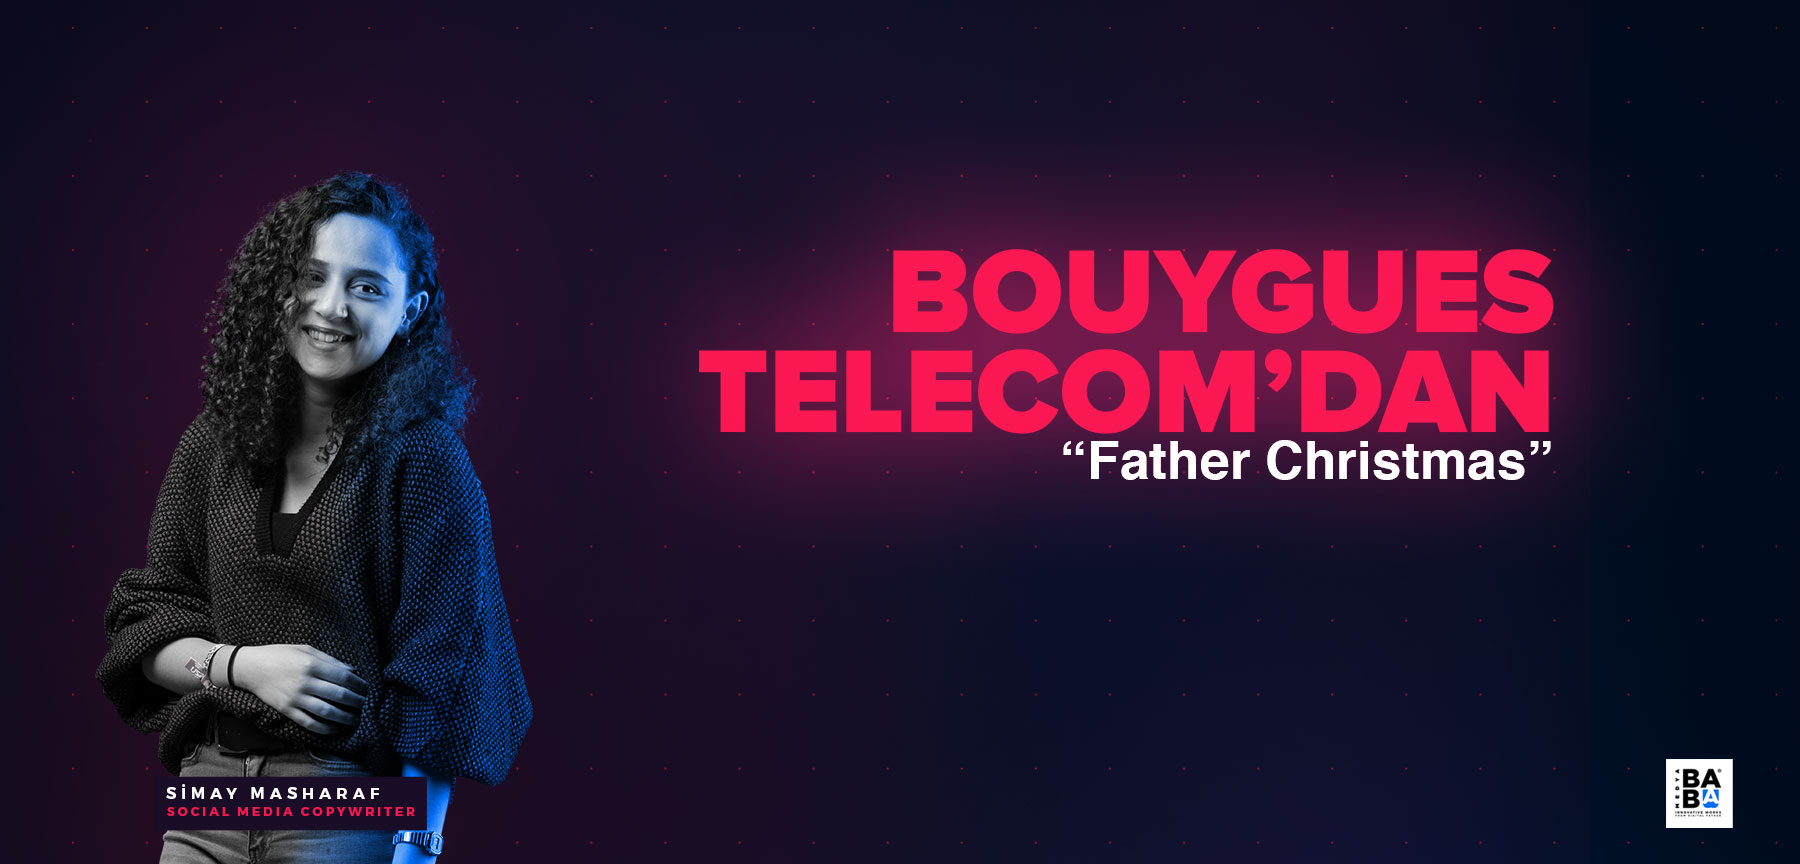 Bouygues Telecom’dan “Father Christmas”